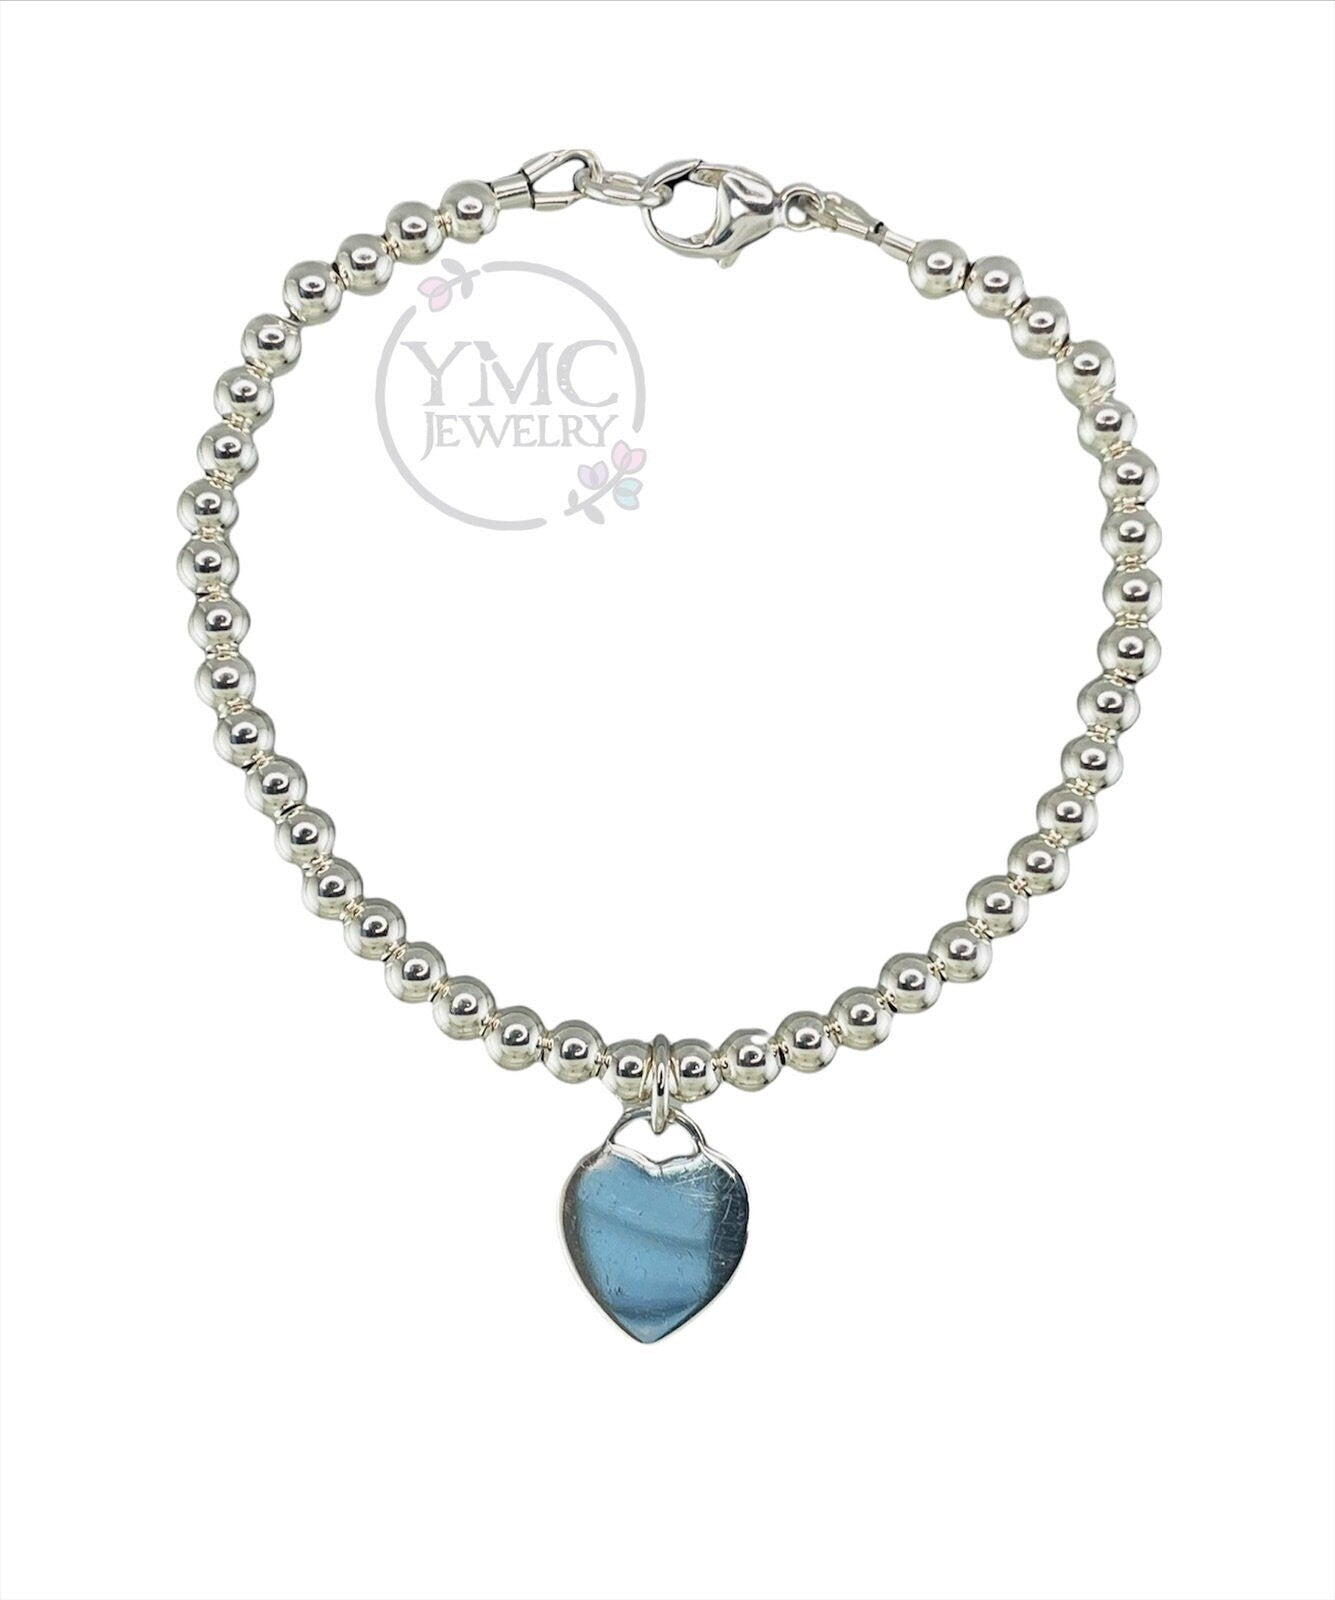 4mm Sterling Silver Ball Beads Bracelet,Dainty Silver Heart Charm Bracelet,Silver Bracelet,Gift for Mom,Bridesmaid Flower girl gift